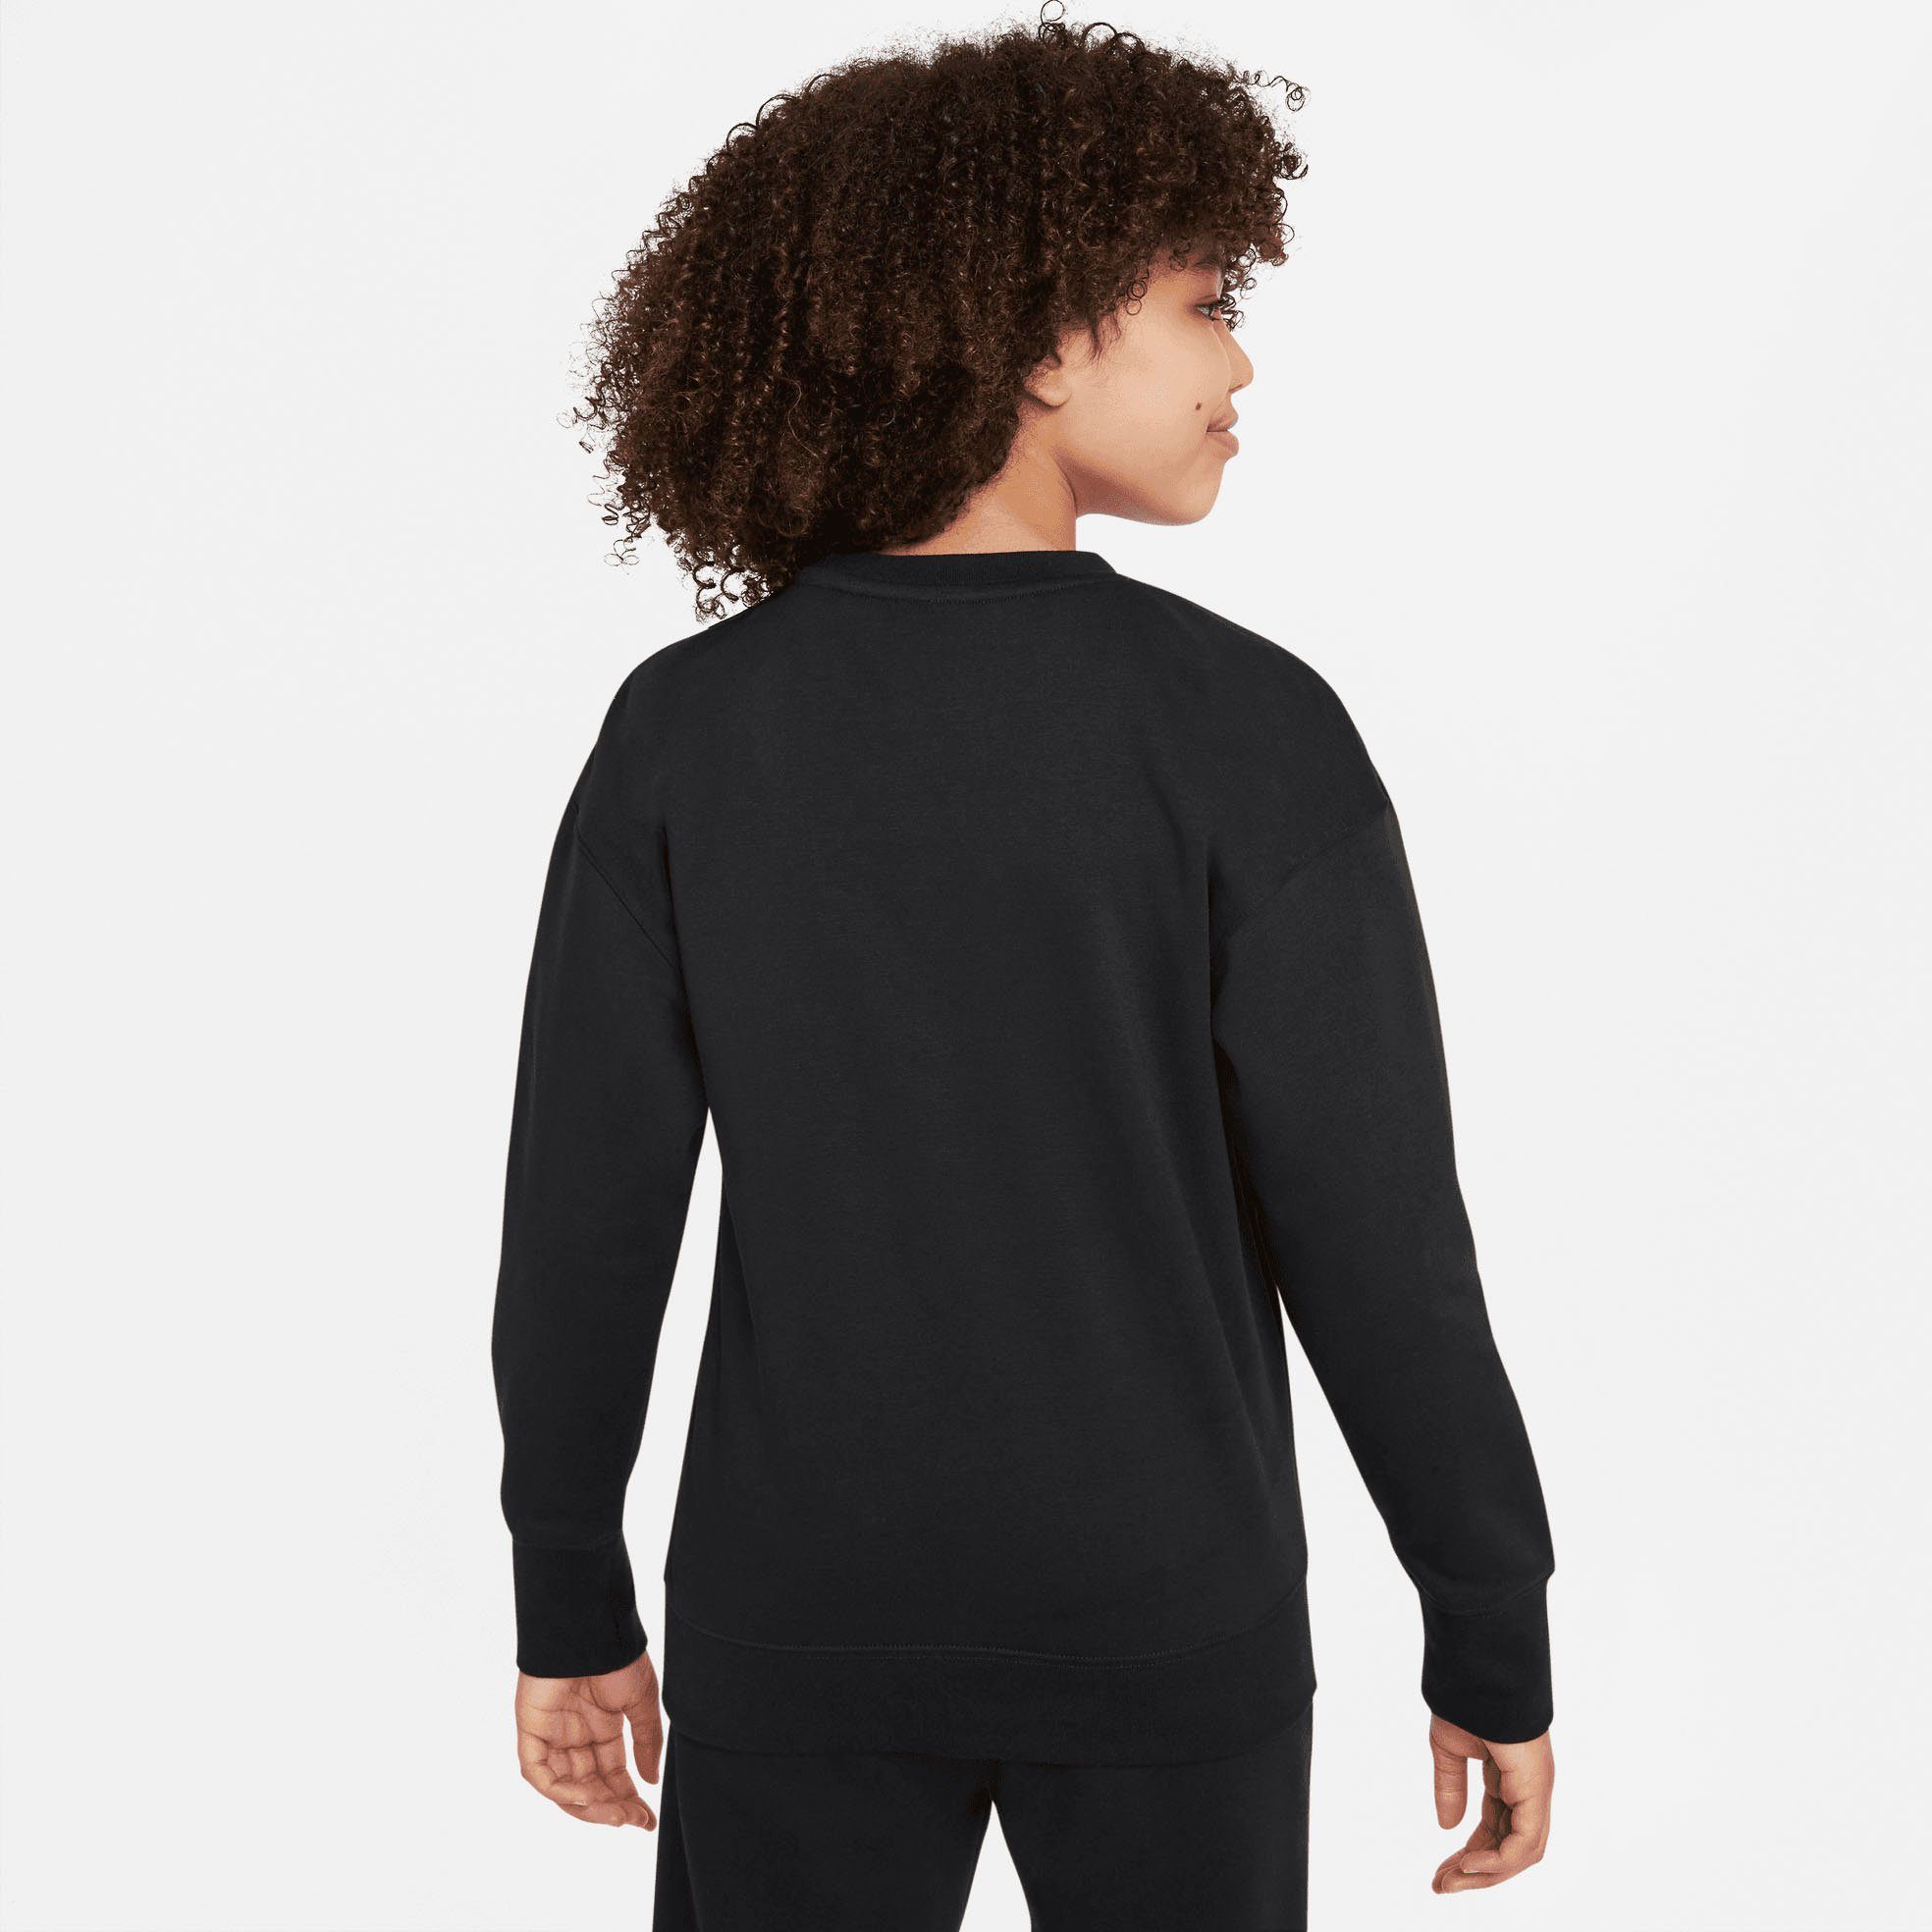 (Girls) Big Sportswear Nike Kids' Sweatshirt schwarz Crew Sweatshirt Fleece Club